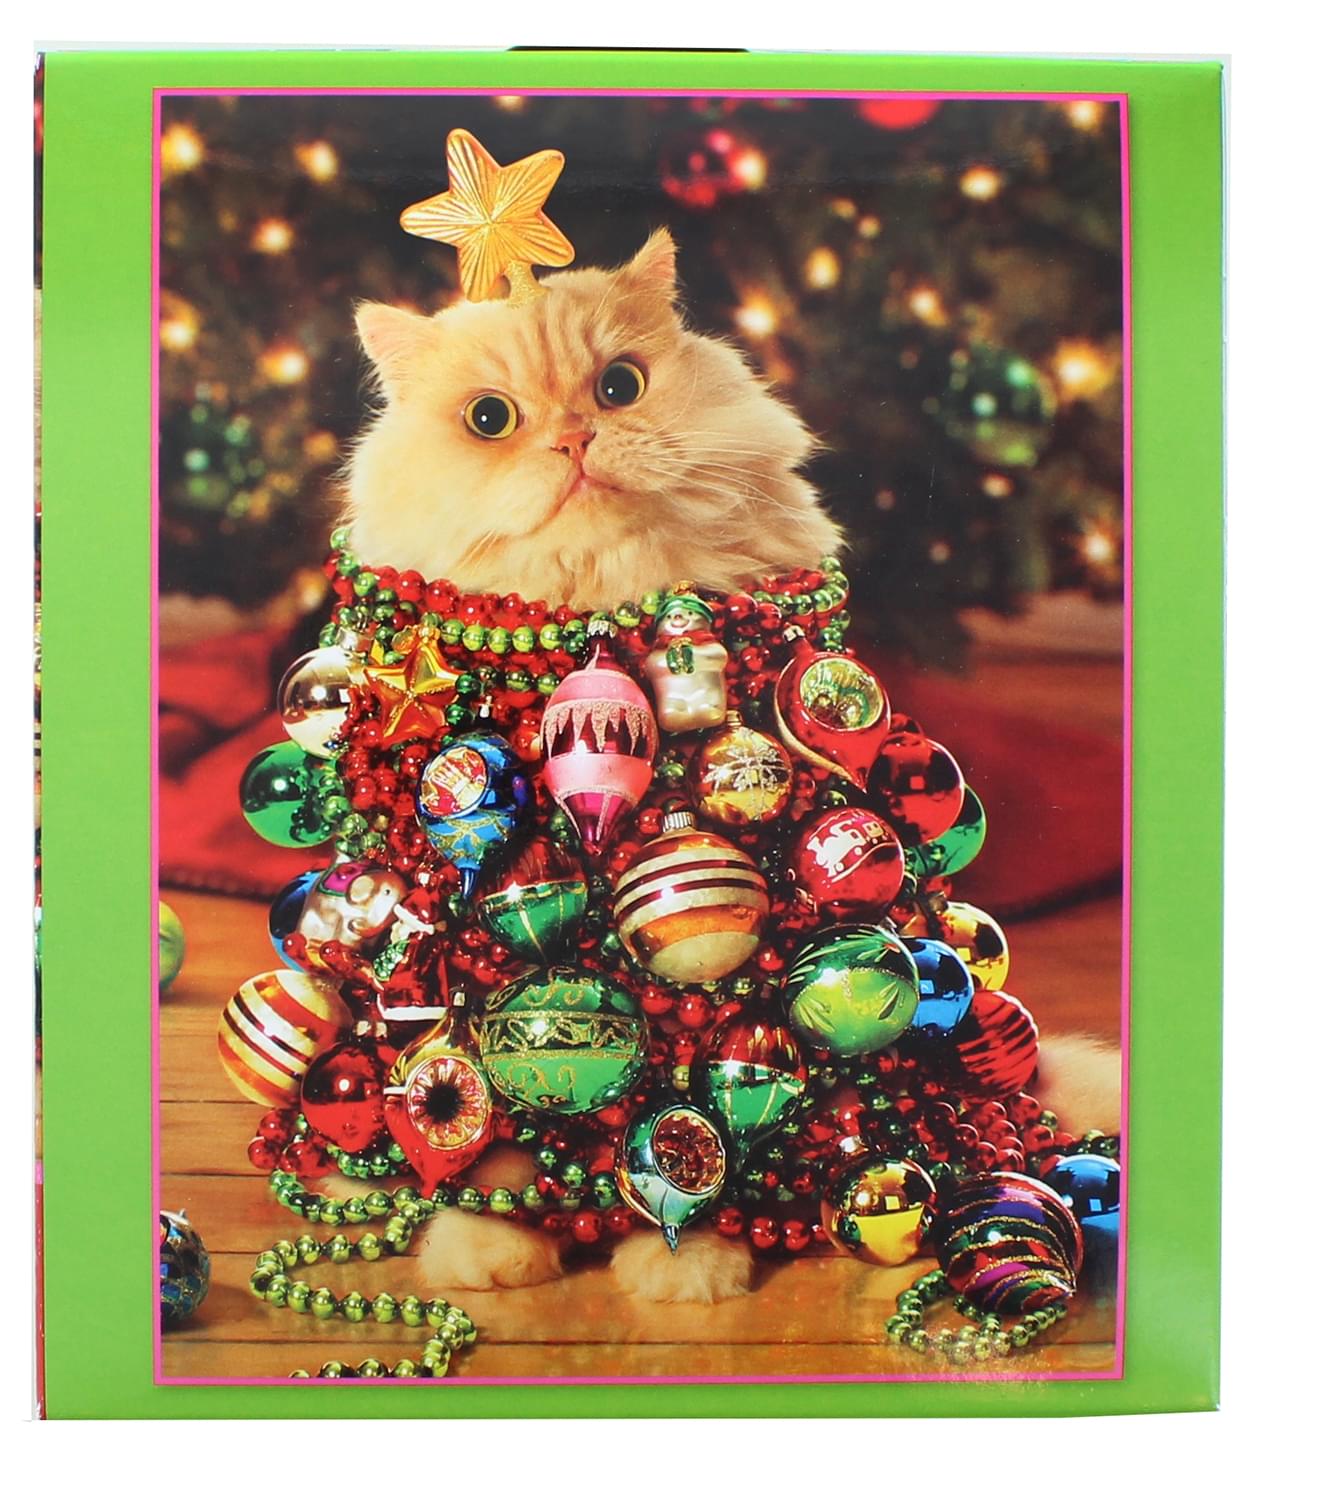 Ornament Kitty 550 Piece Christmas Jigsaw Puzzle